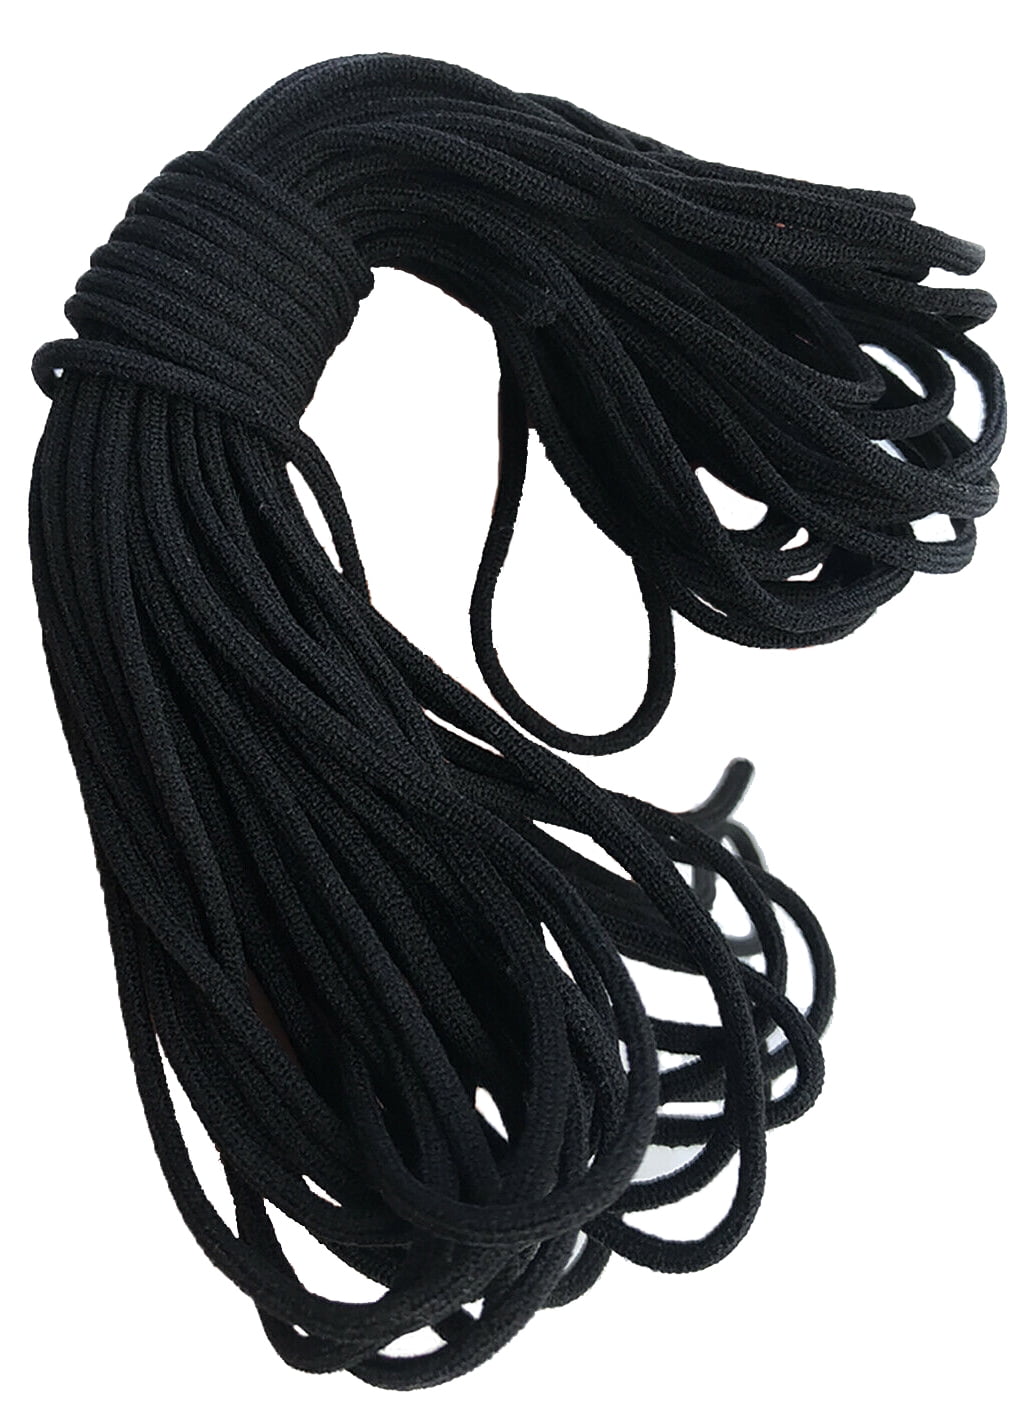 Elastic Strap Stretch Rope Ear Band Loop Cord Ear Tie Rope Handmade String Length Braided Heavy Stretch High Elasticity for Knit Sewing Crafts DIY Bedspread Cuff Nylon White 5mm Flat 10.9 Yards 